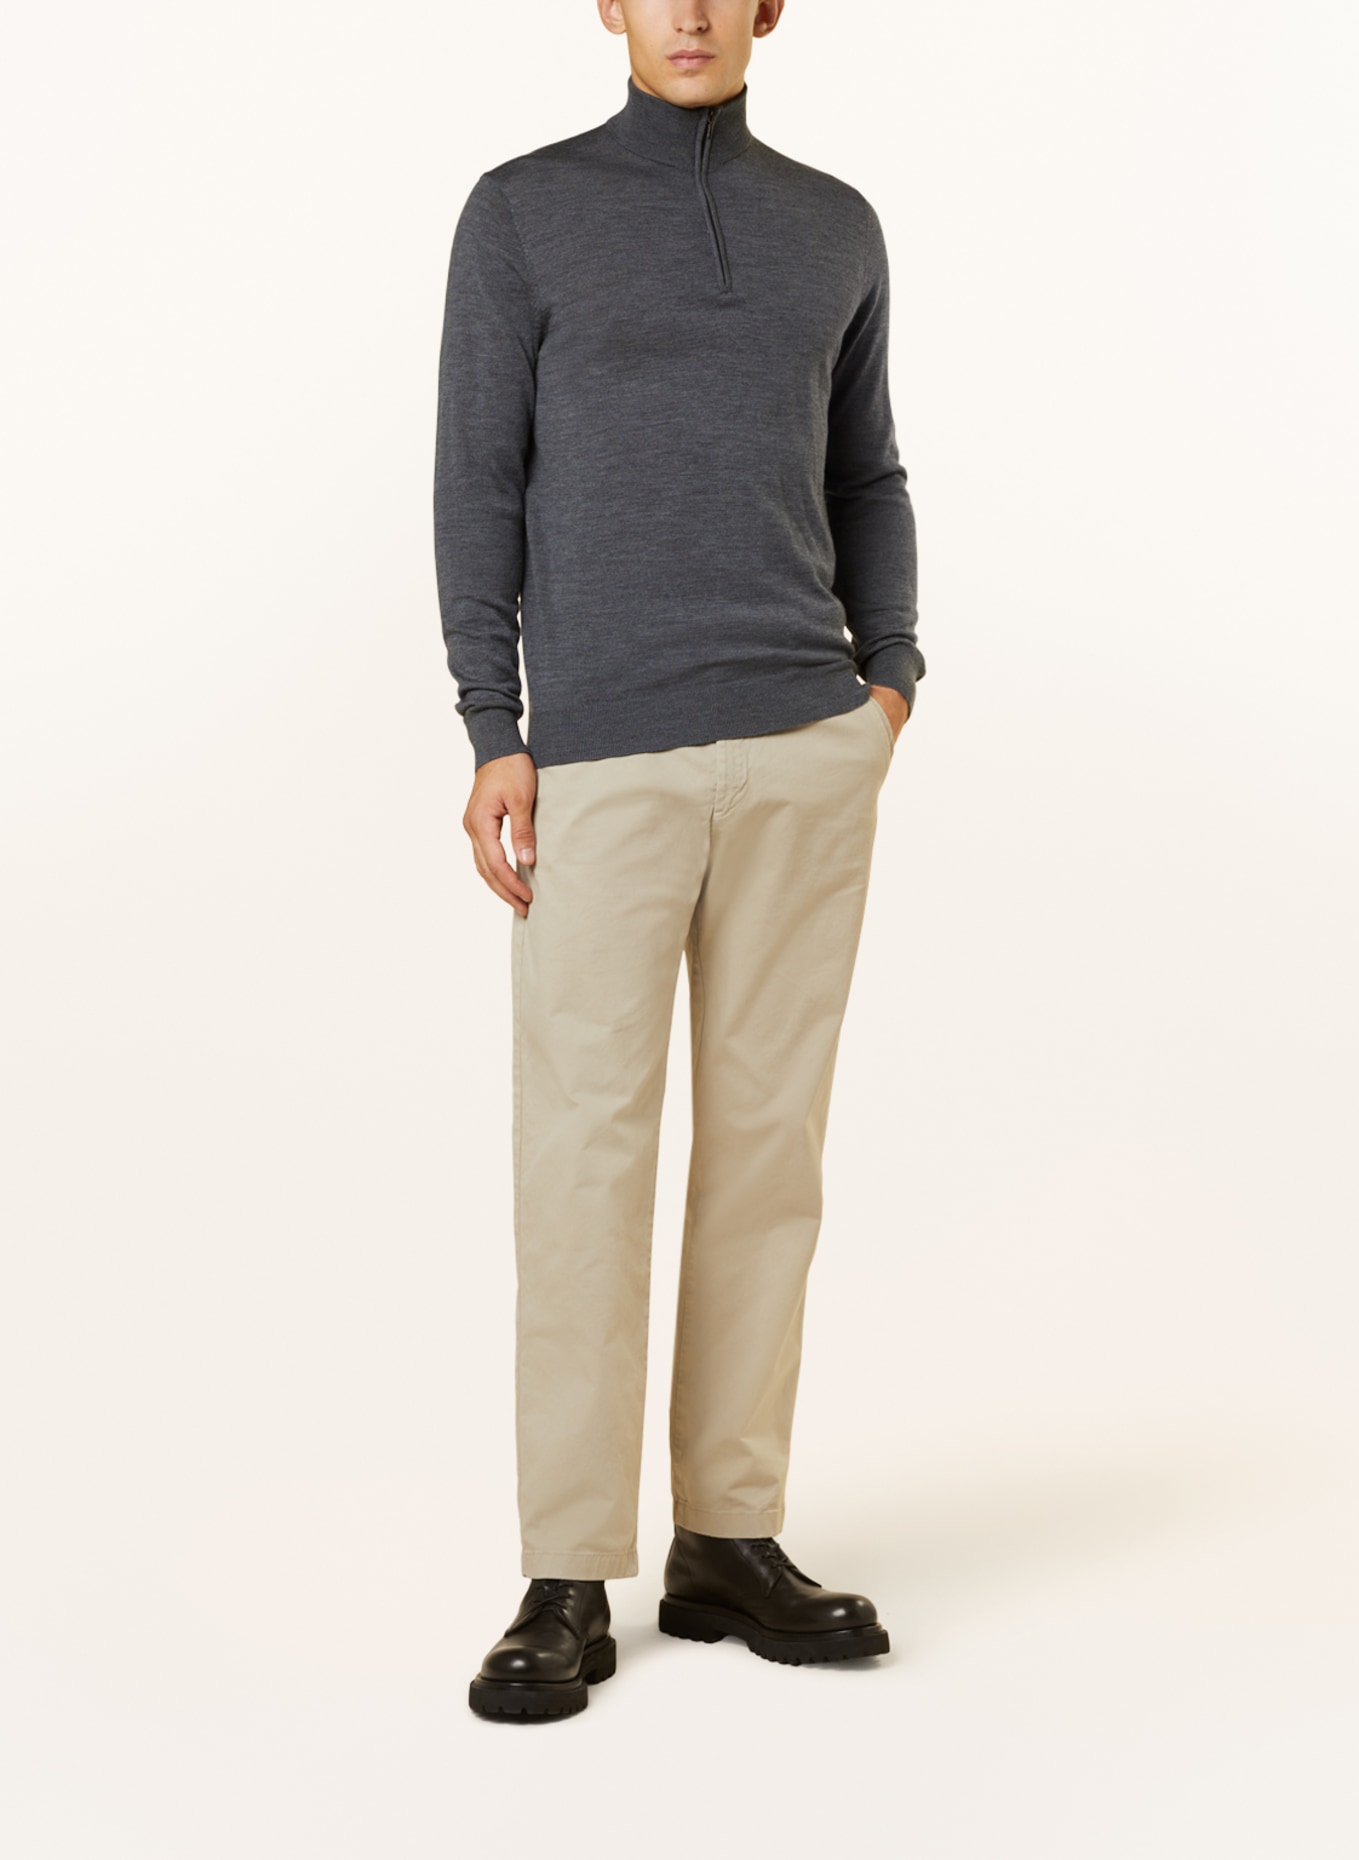 PROFUOMO Half-zip sweater made of merino wool, Color: GRAY (Image 2)